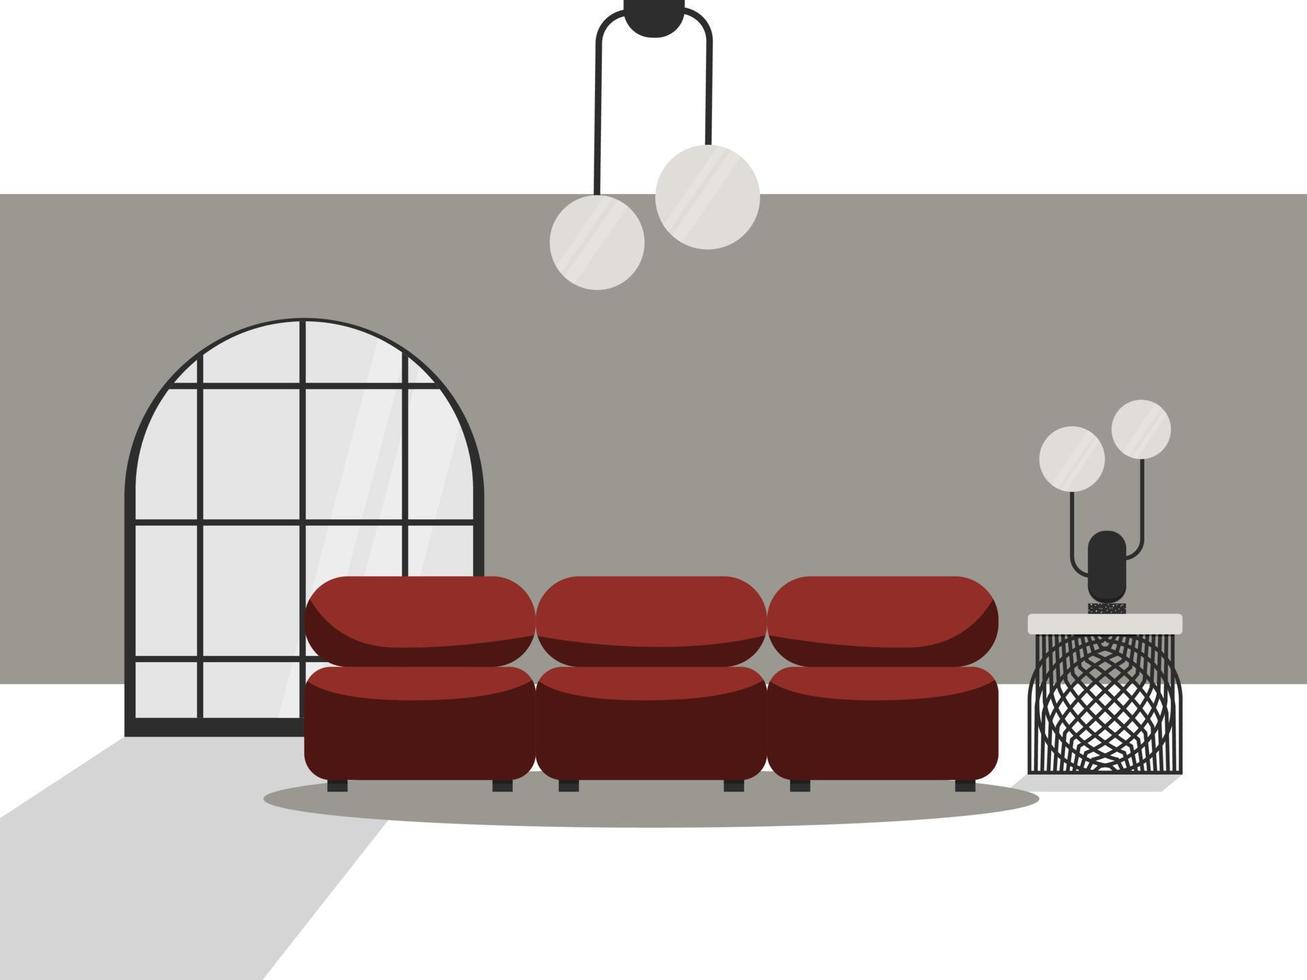 modern leven kamer met meubilair, interieur ontwerp, premie vector